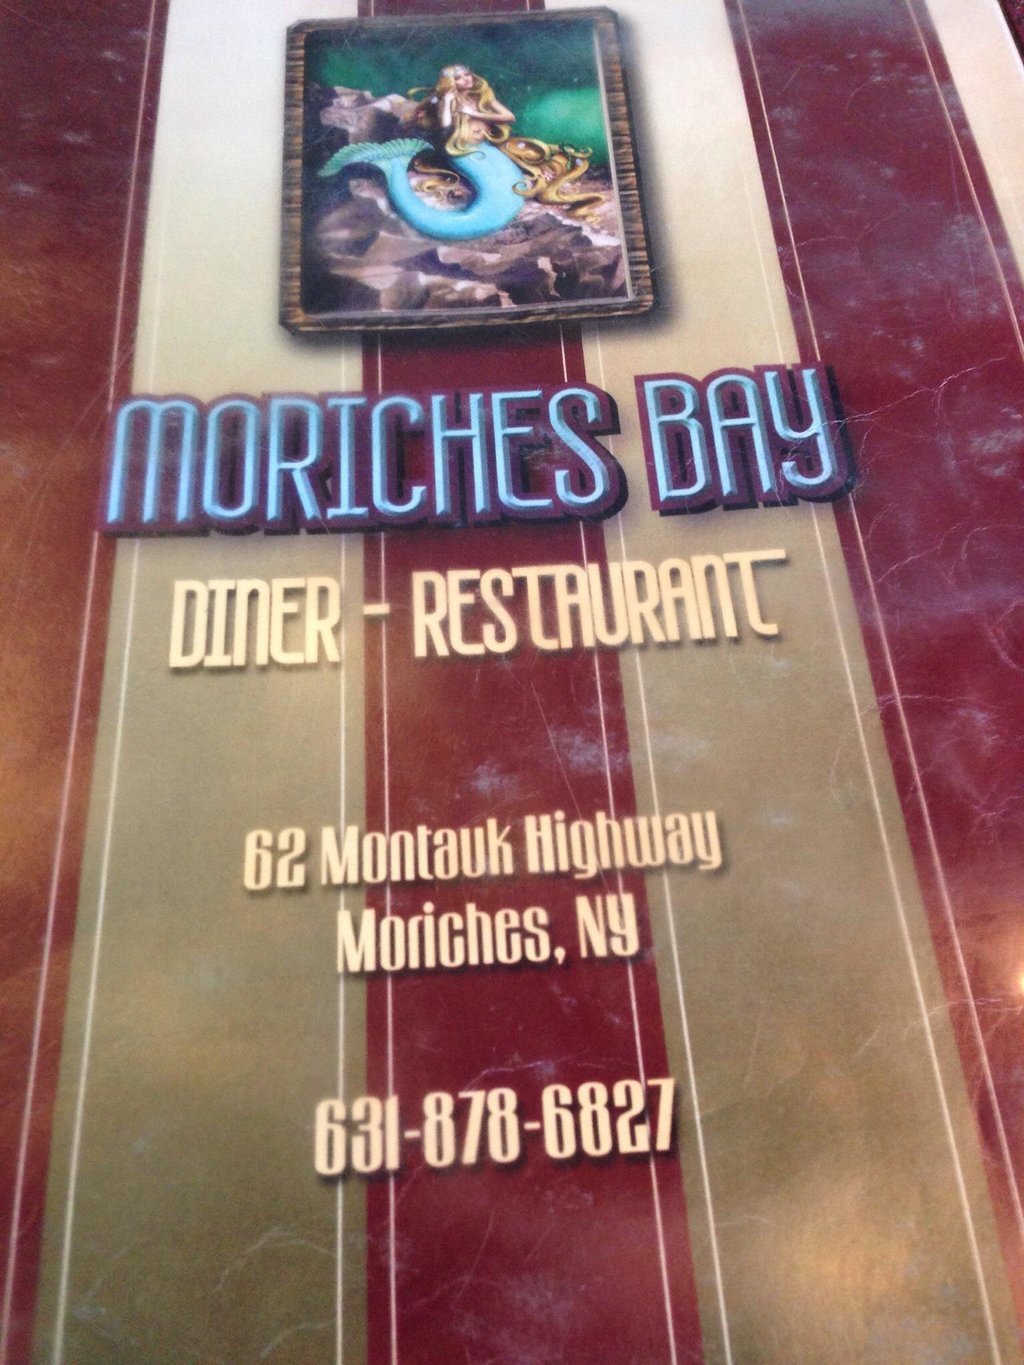 Moriches Bay Diner